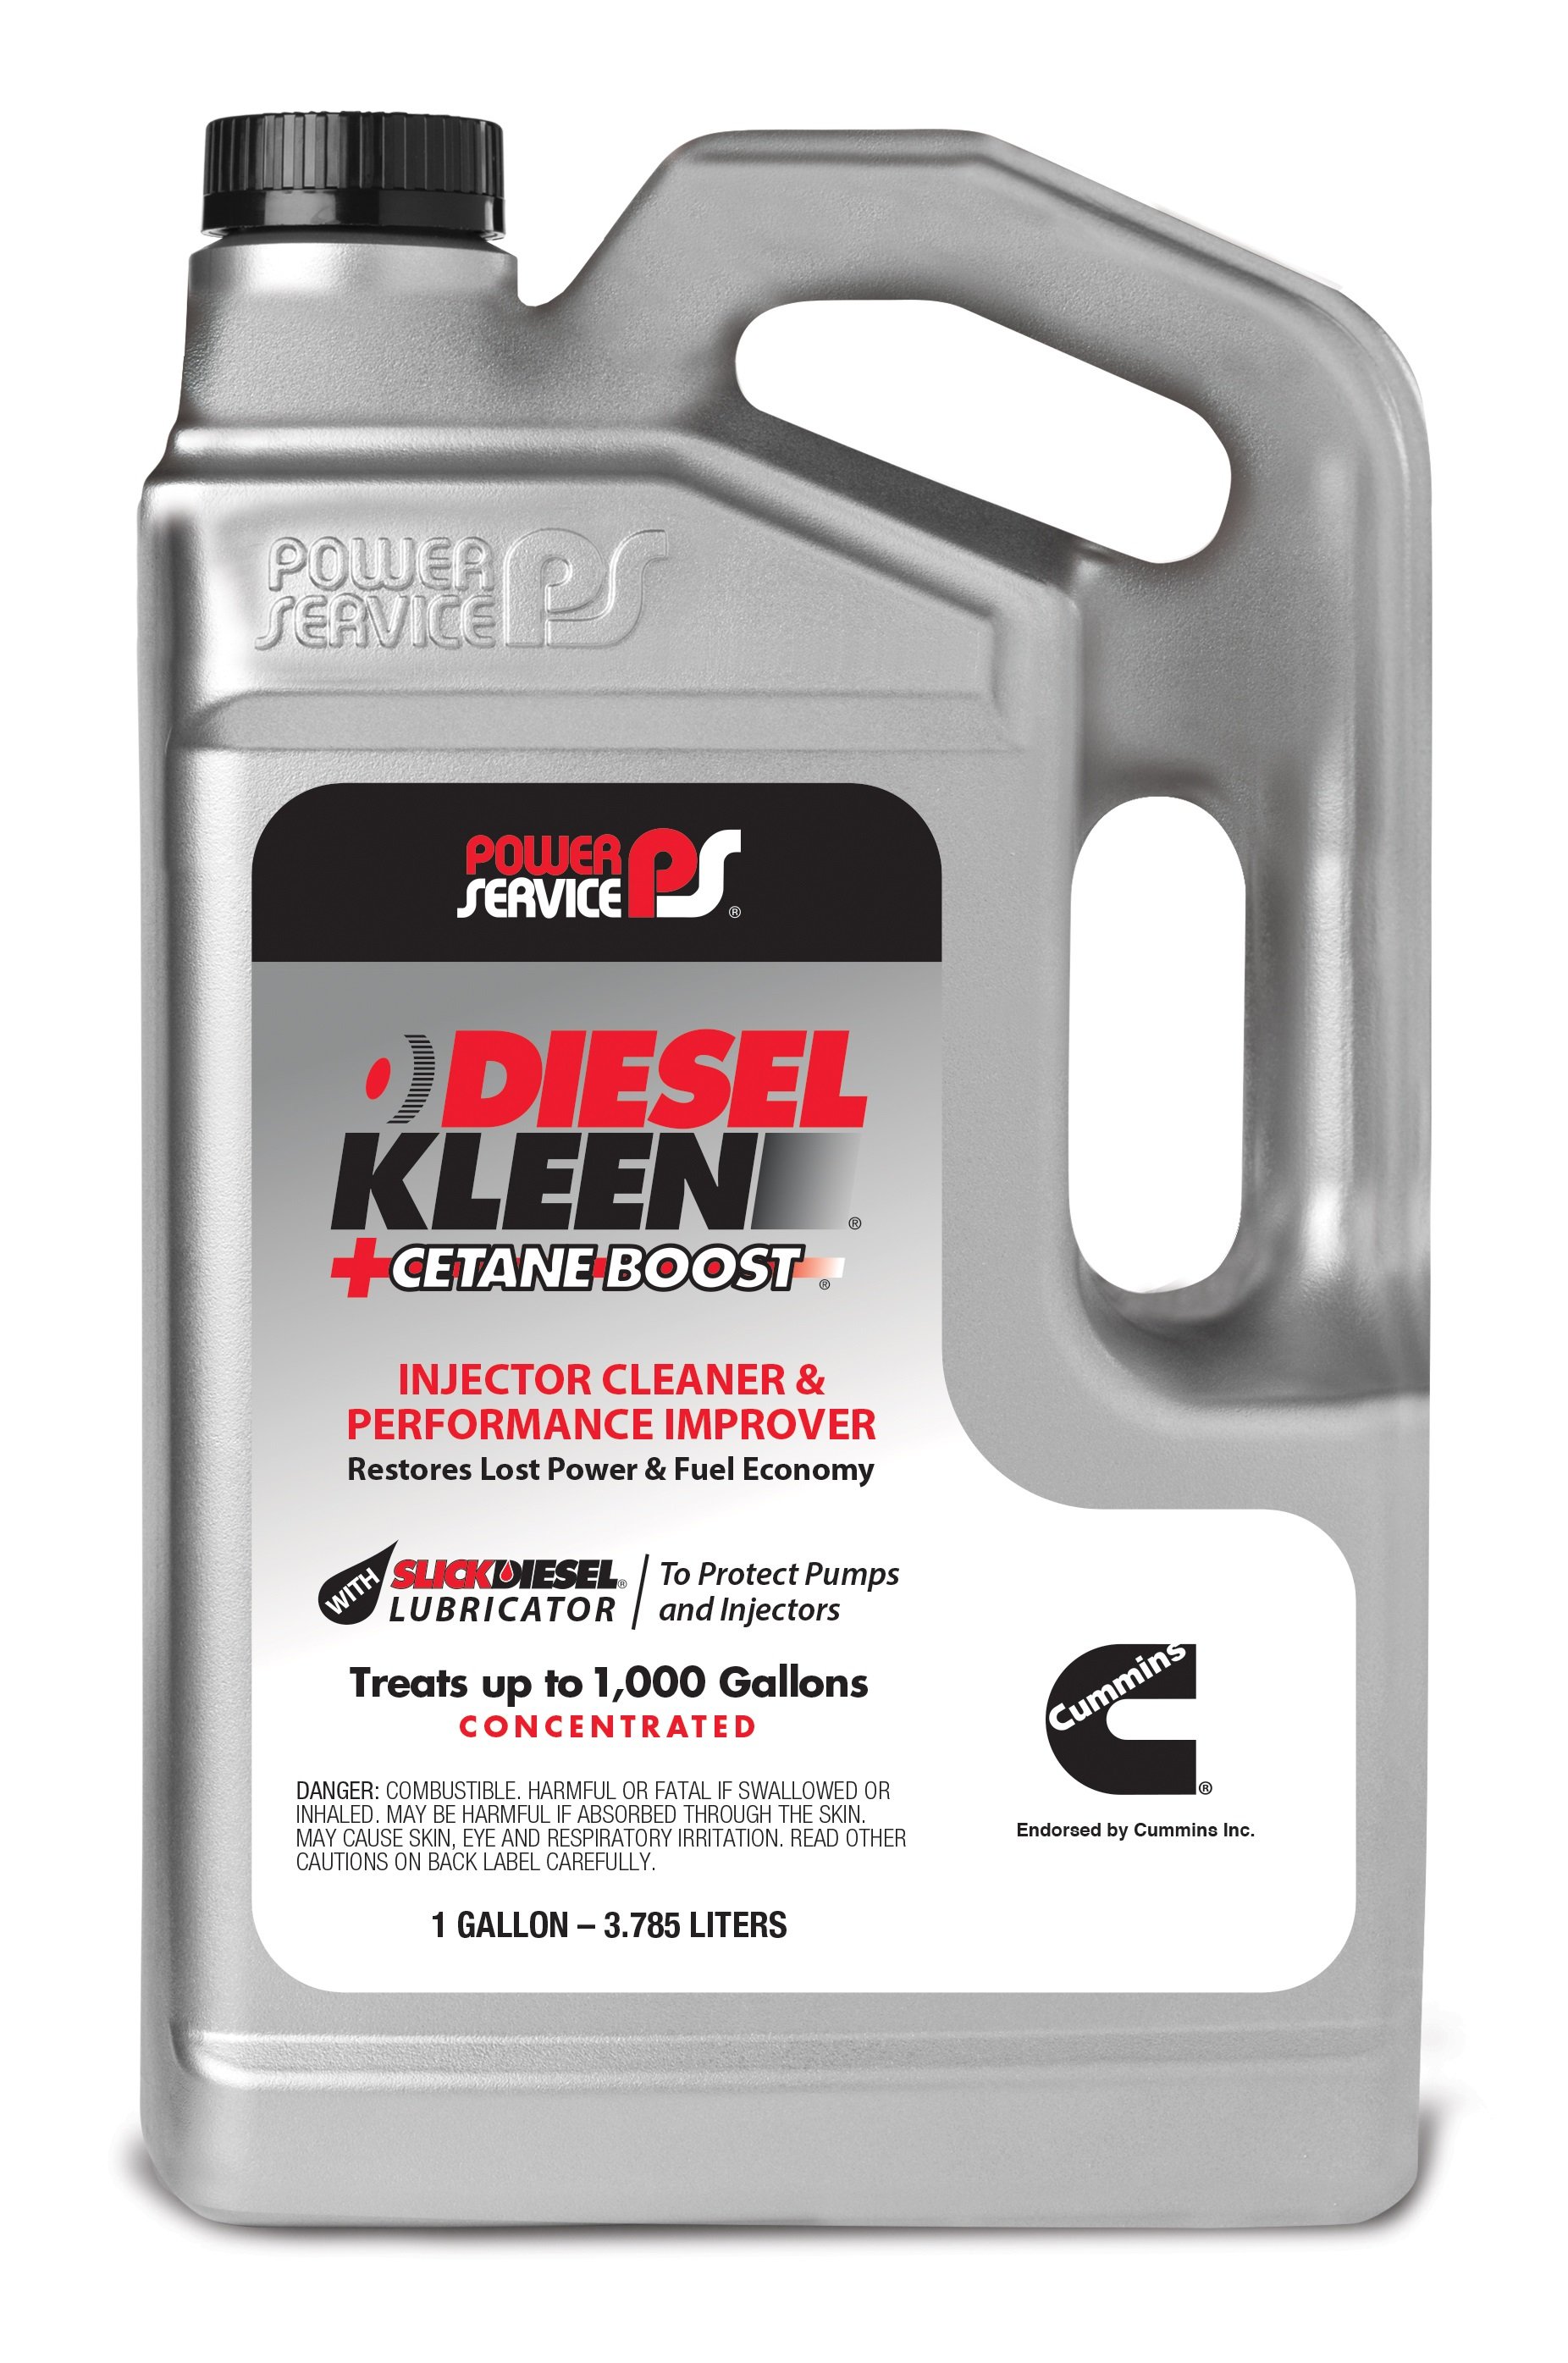 Power Service Products Diesel Kleen Plus Cetane Boost, 1 Gallon - 03128-04